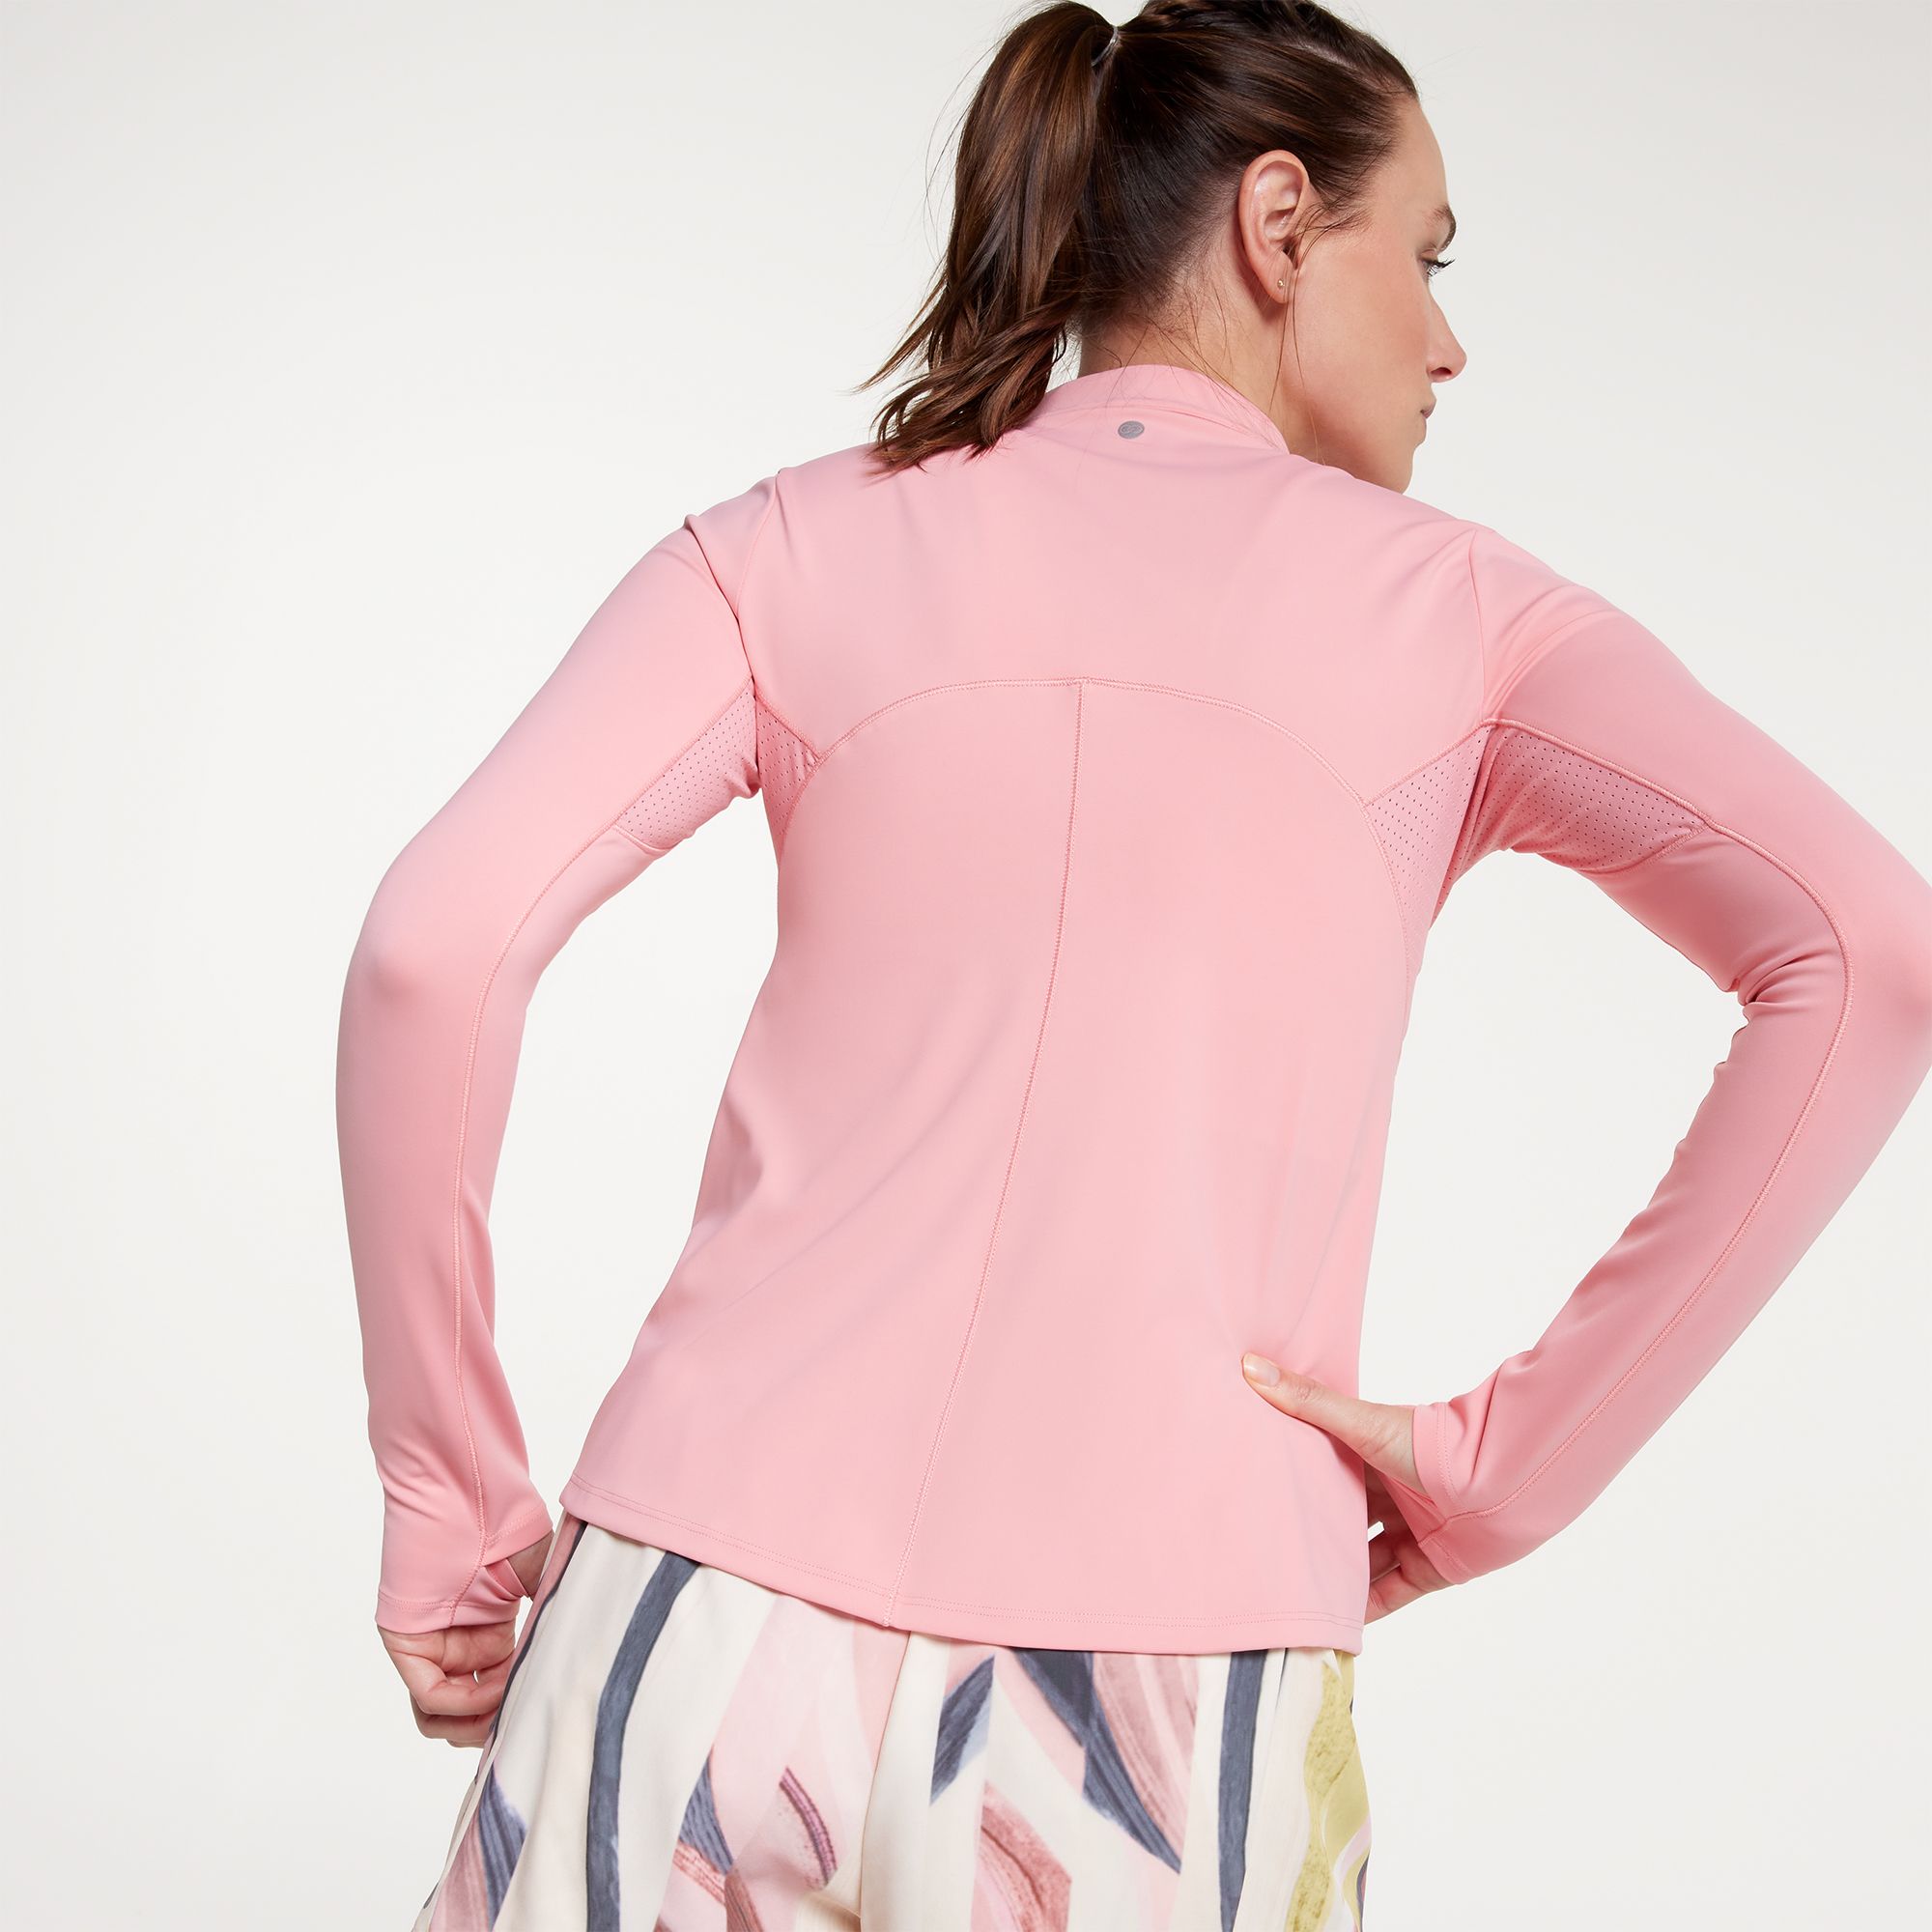 CALIA Women's Run Long Sleeve 1/4 Zip Pullover